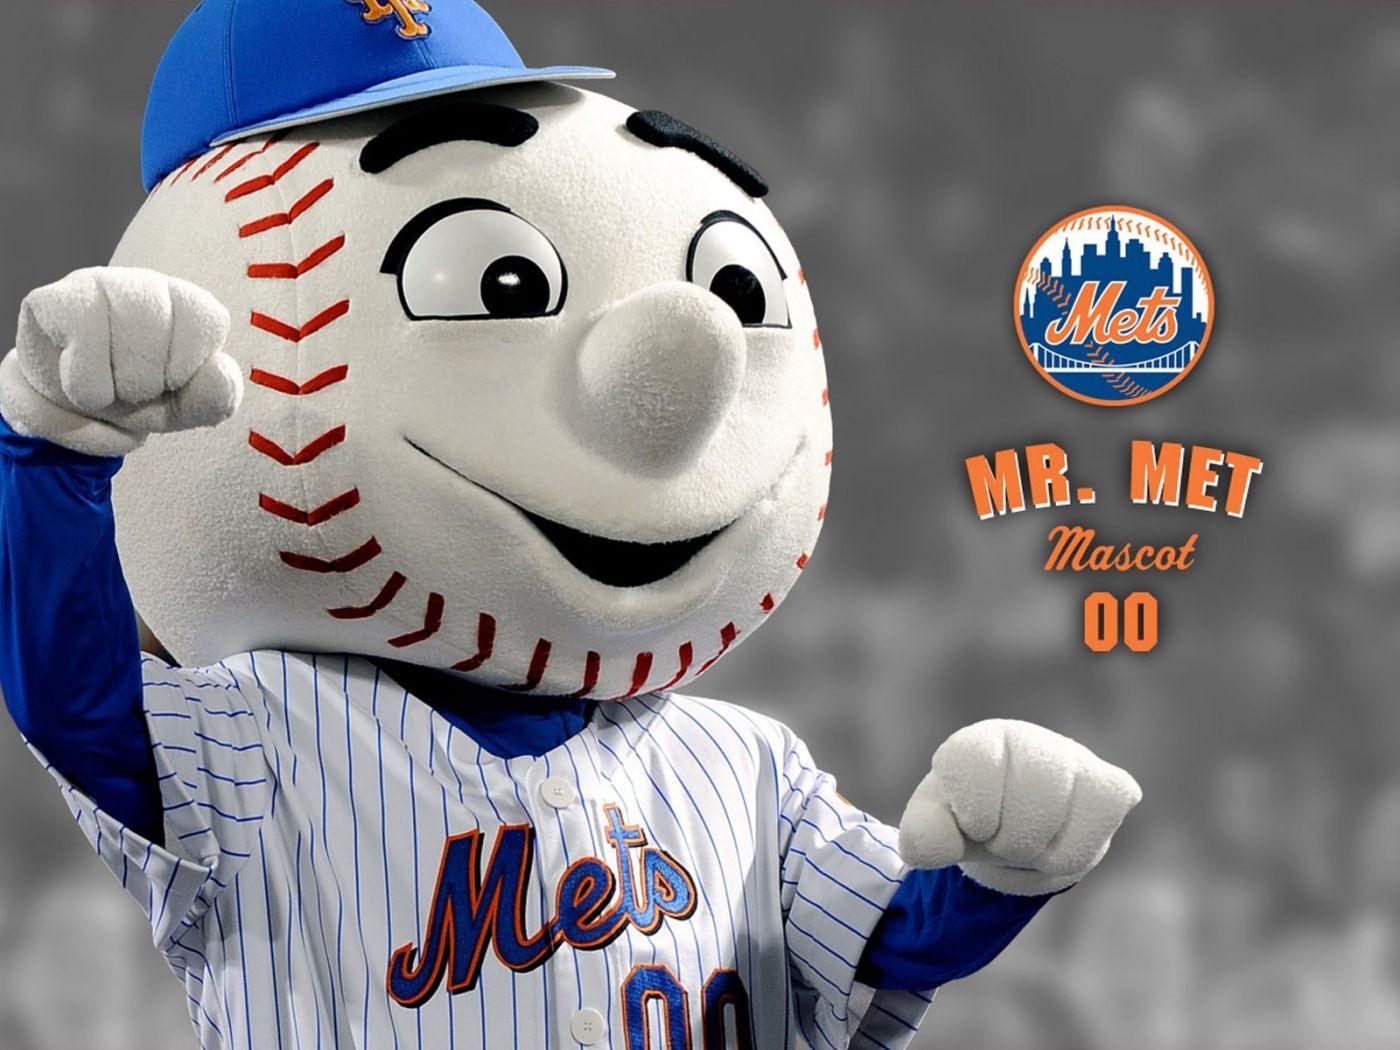 All designs celebrity: new york mets wallpaper 800×500 New York Mets